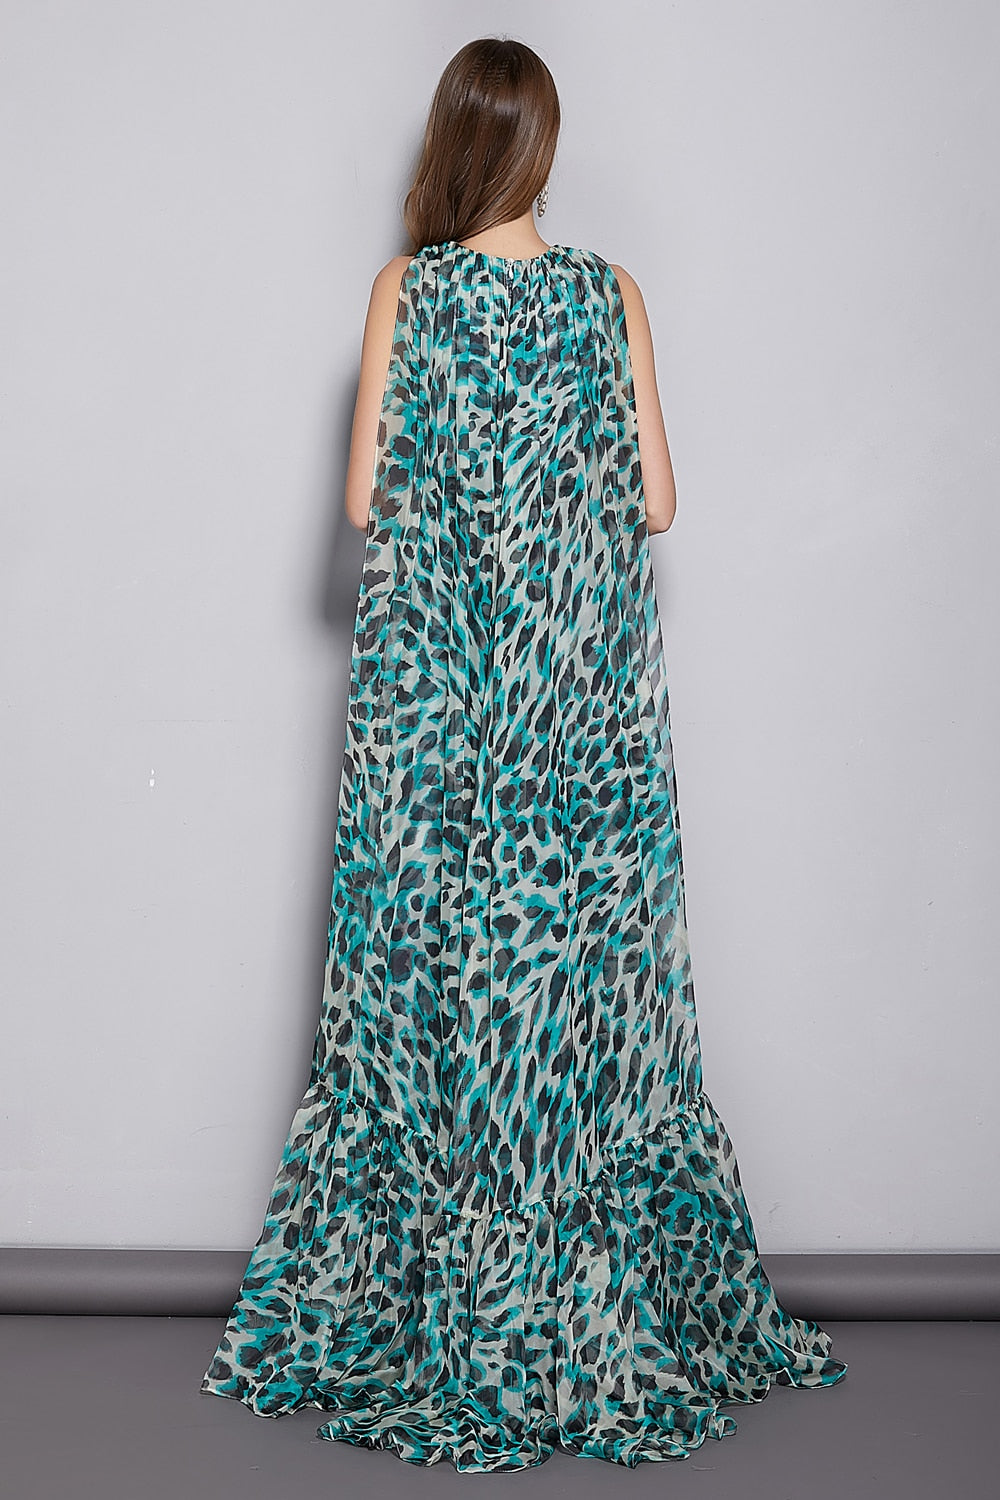 2XL BLue Leopard Print Chiffon Dress O Neck Sleeveless Plus Size Women